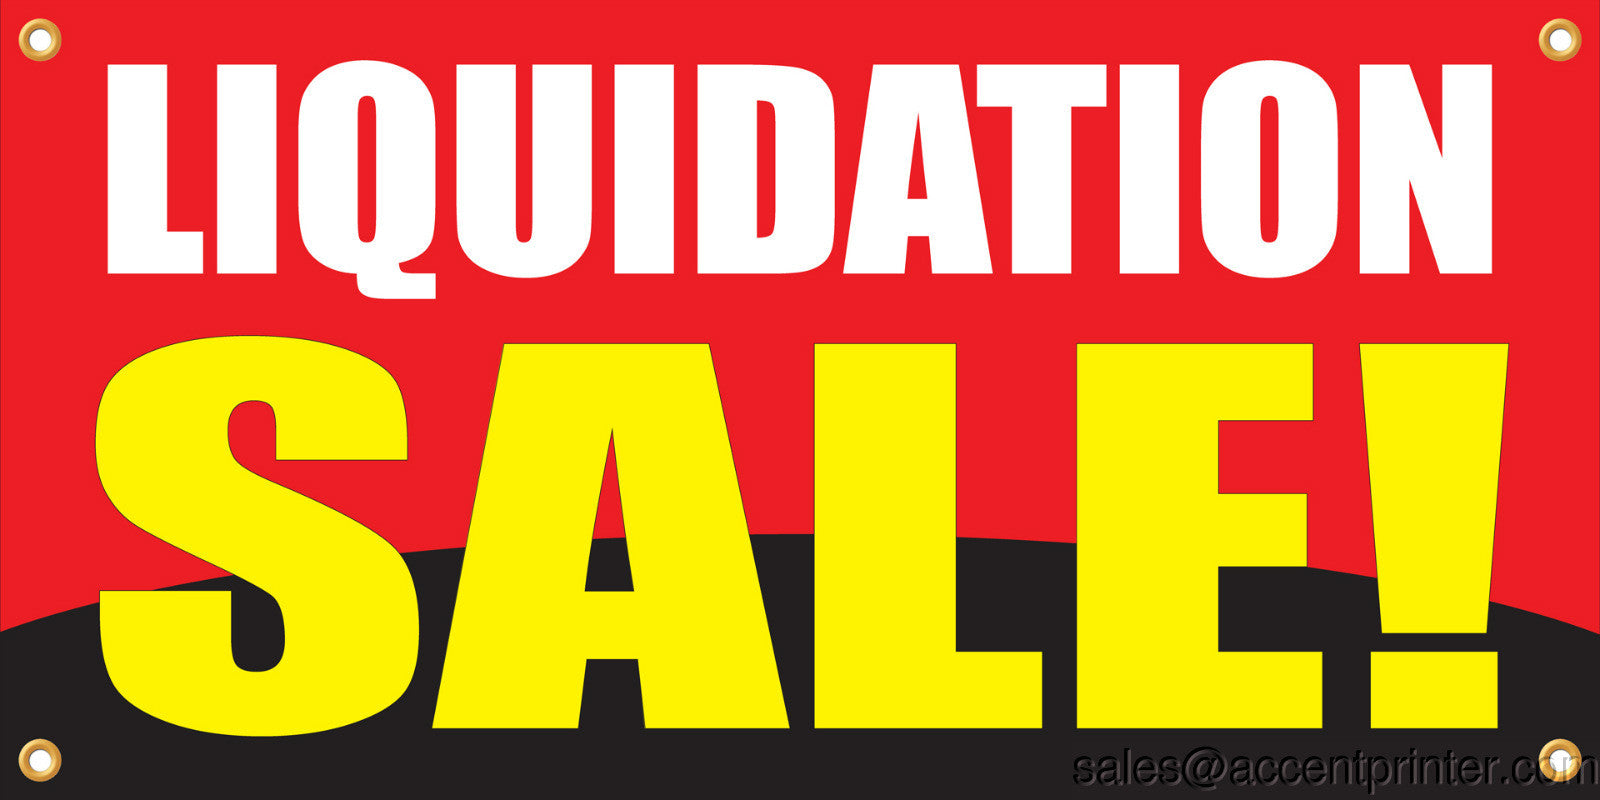 liquidation sale